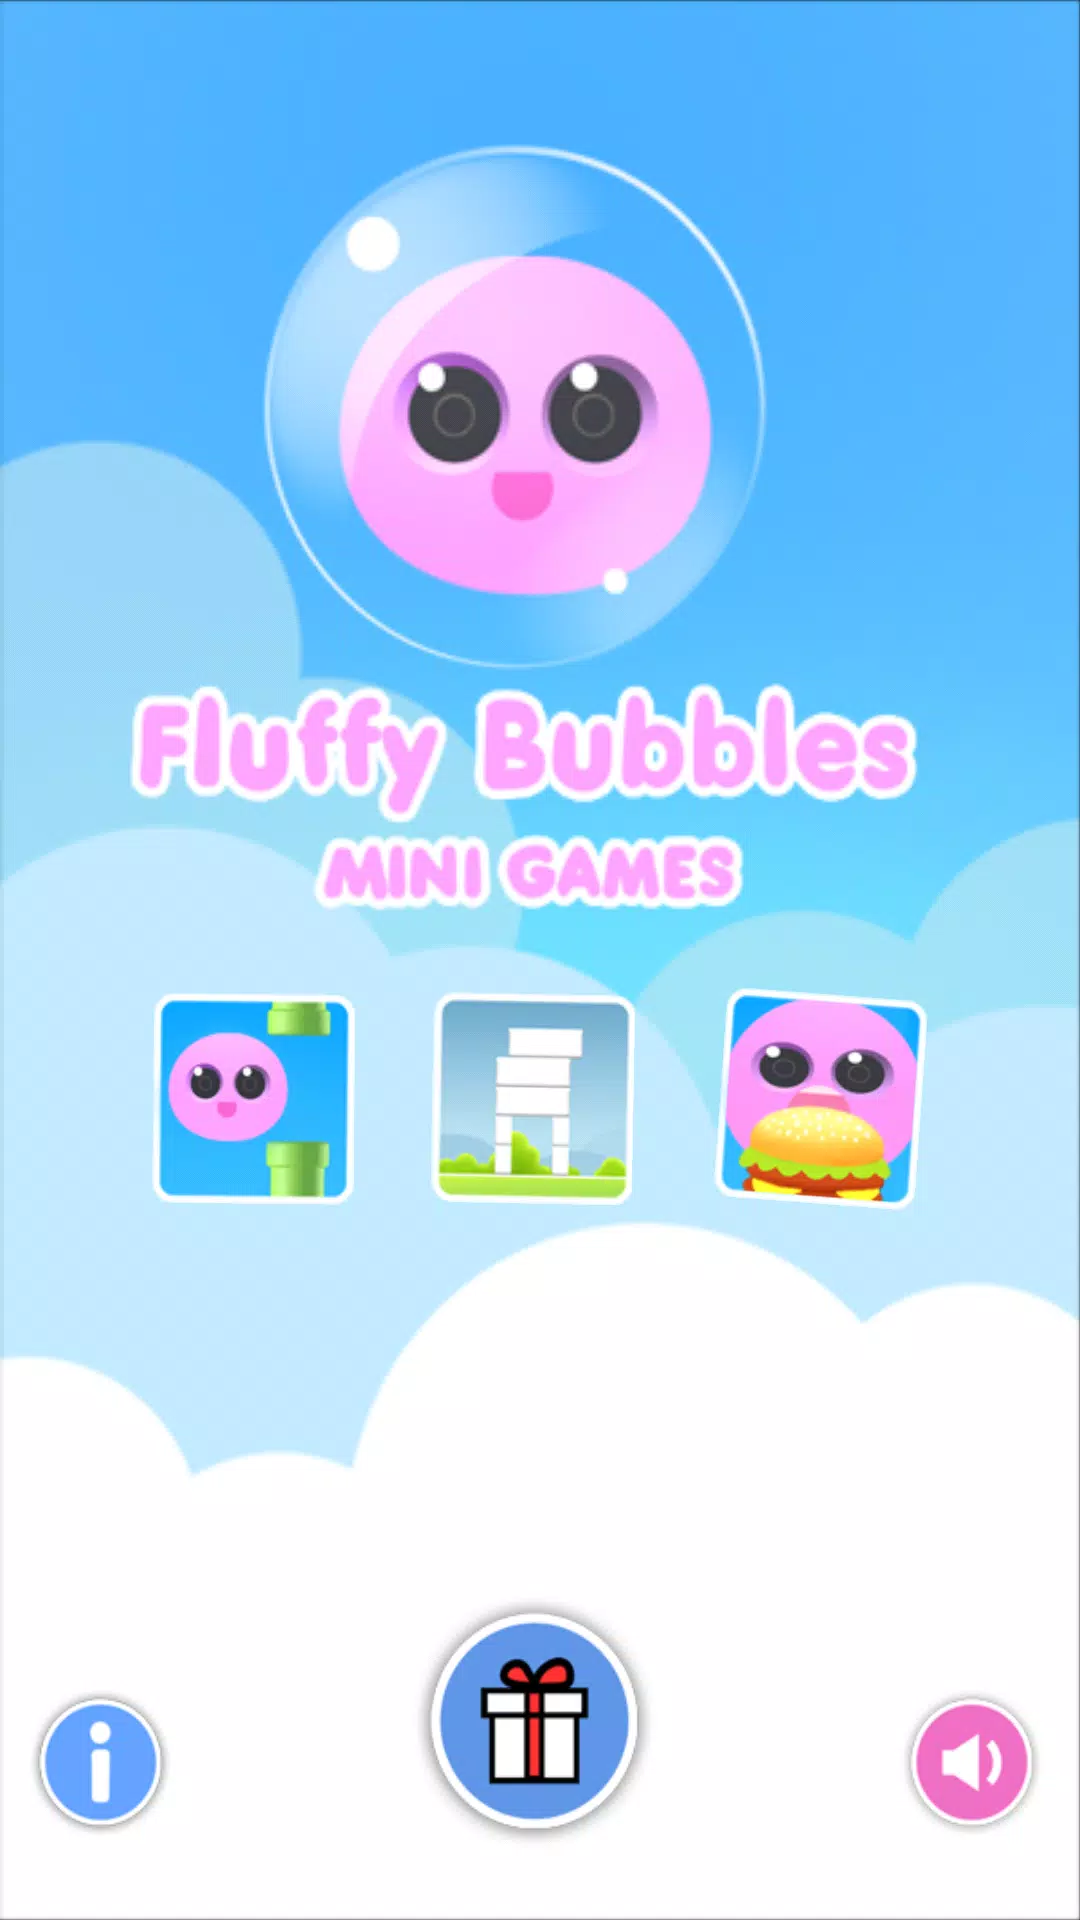 Mini Fazenda Bubble!! para Android - Baixe o APK na Uptodown